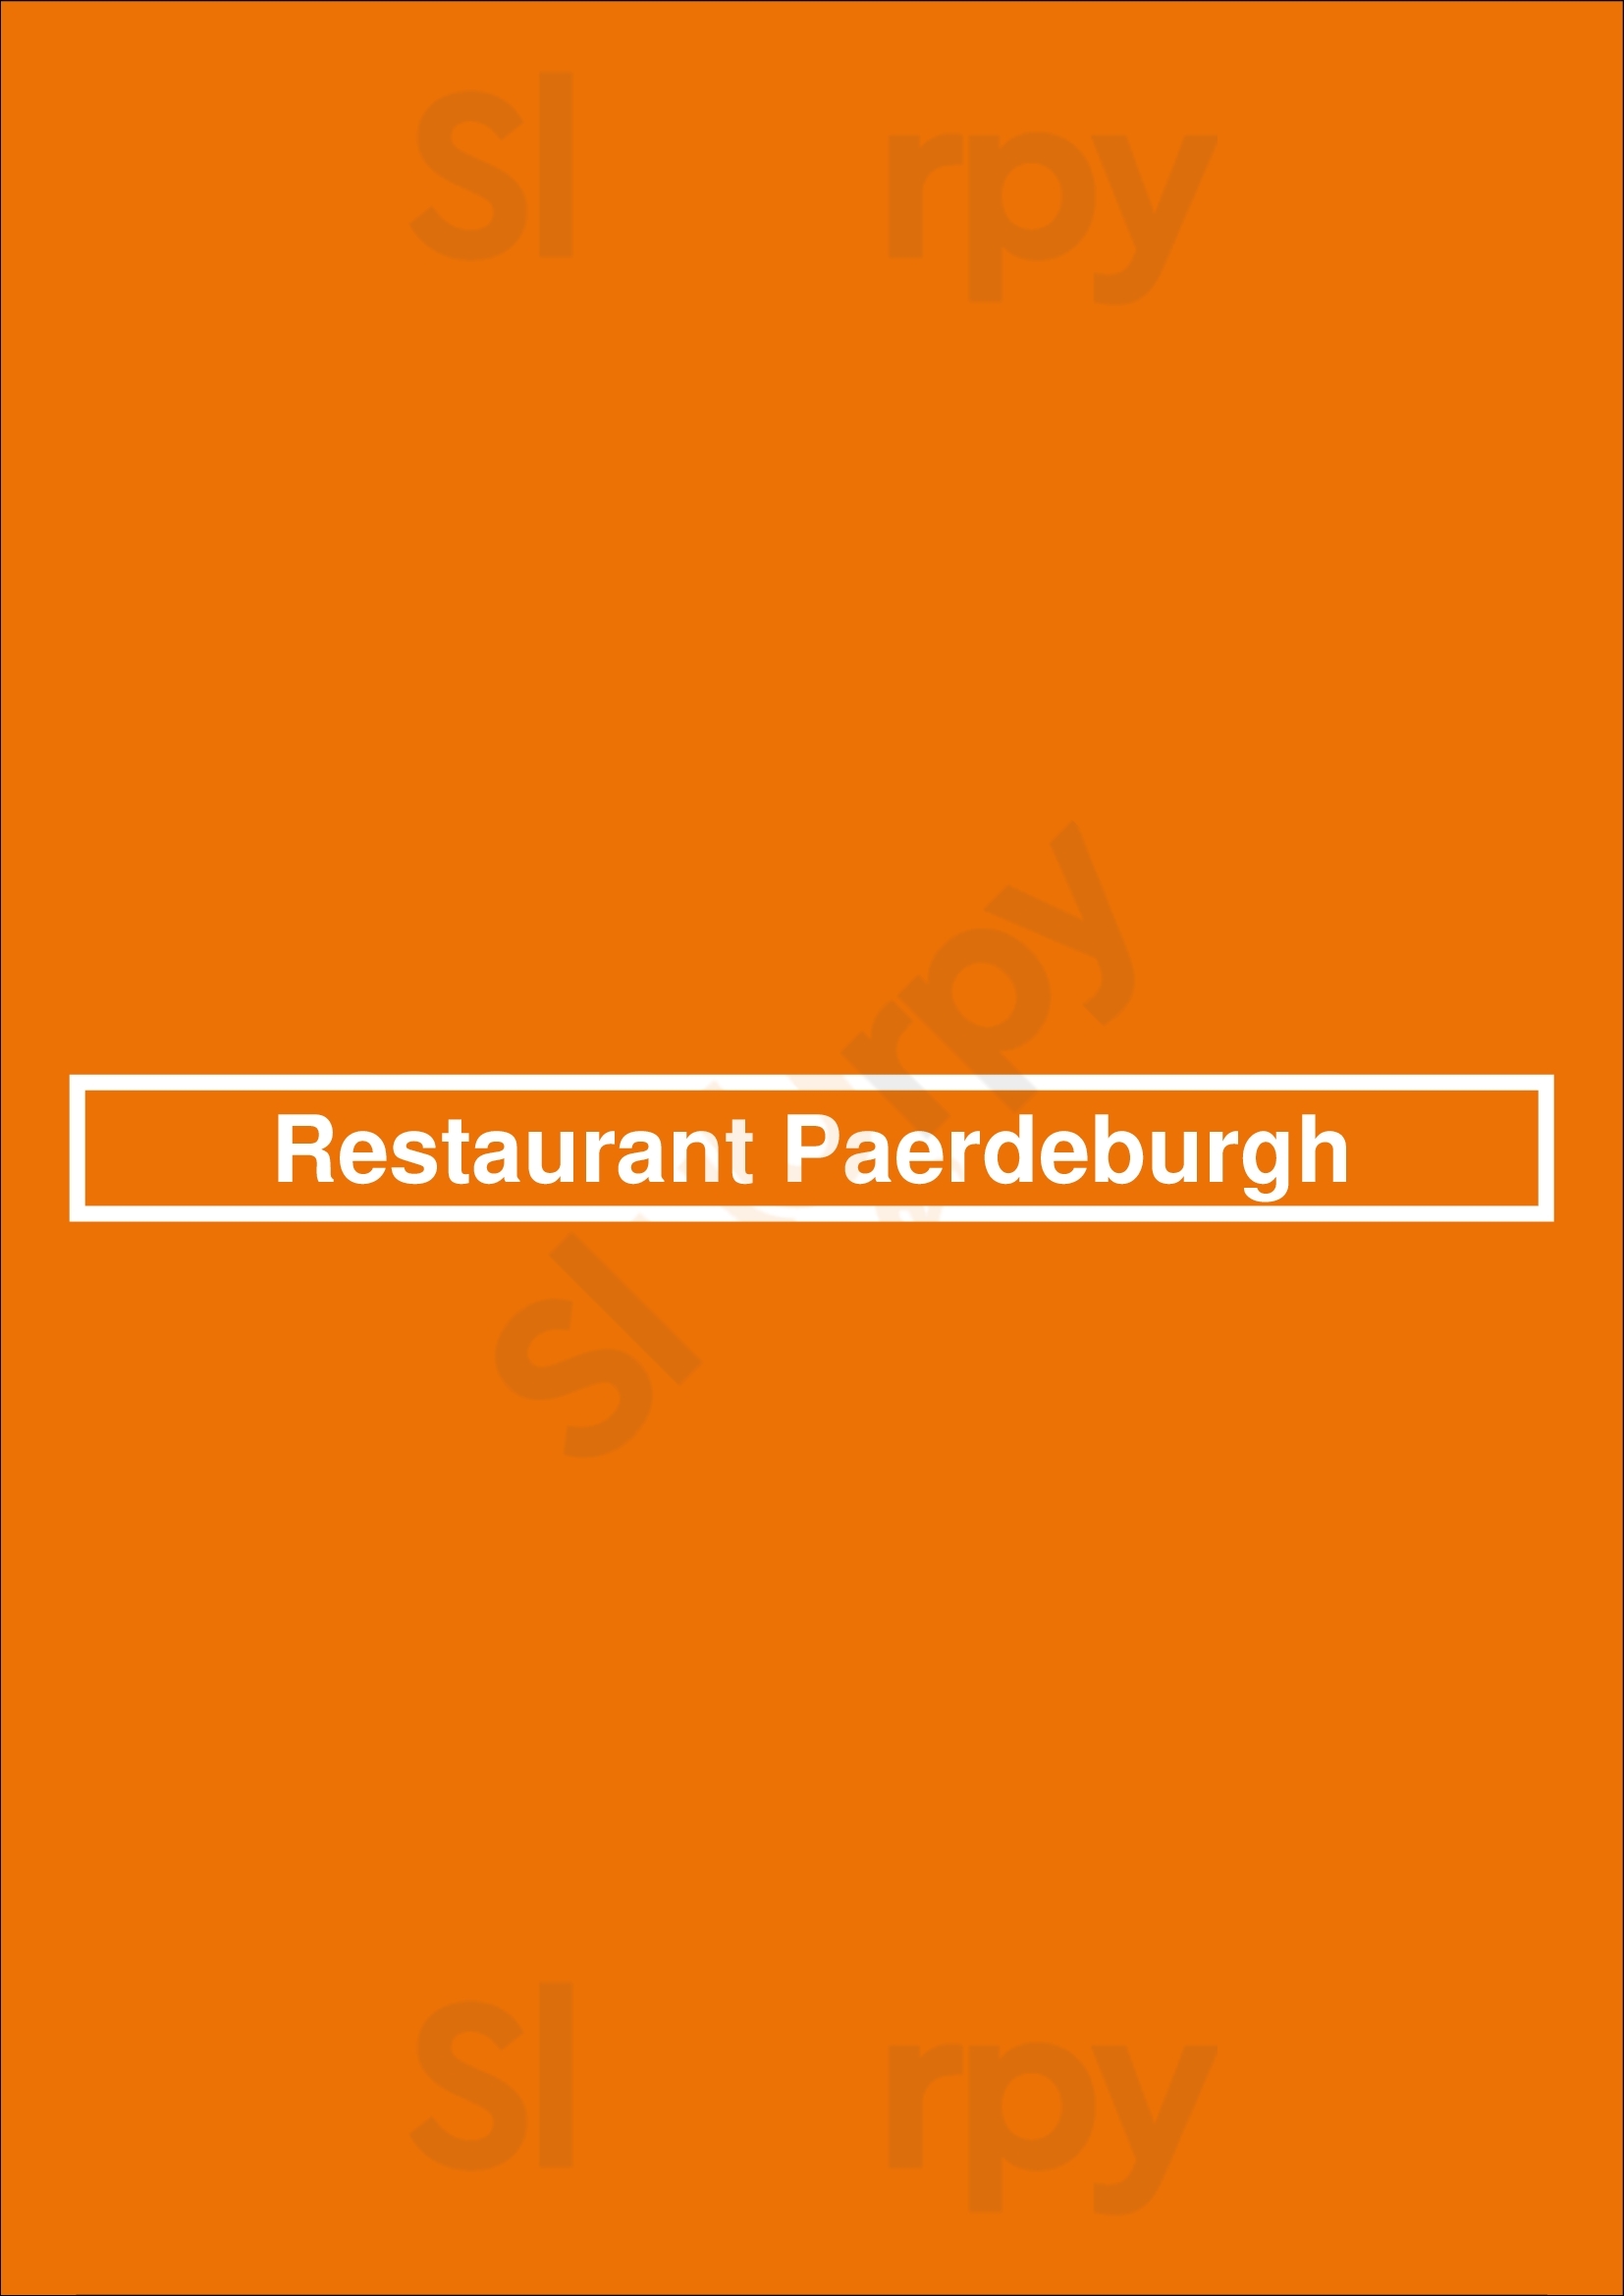 Restaurant Paerdeburgh Rijpwetering Menu - 1